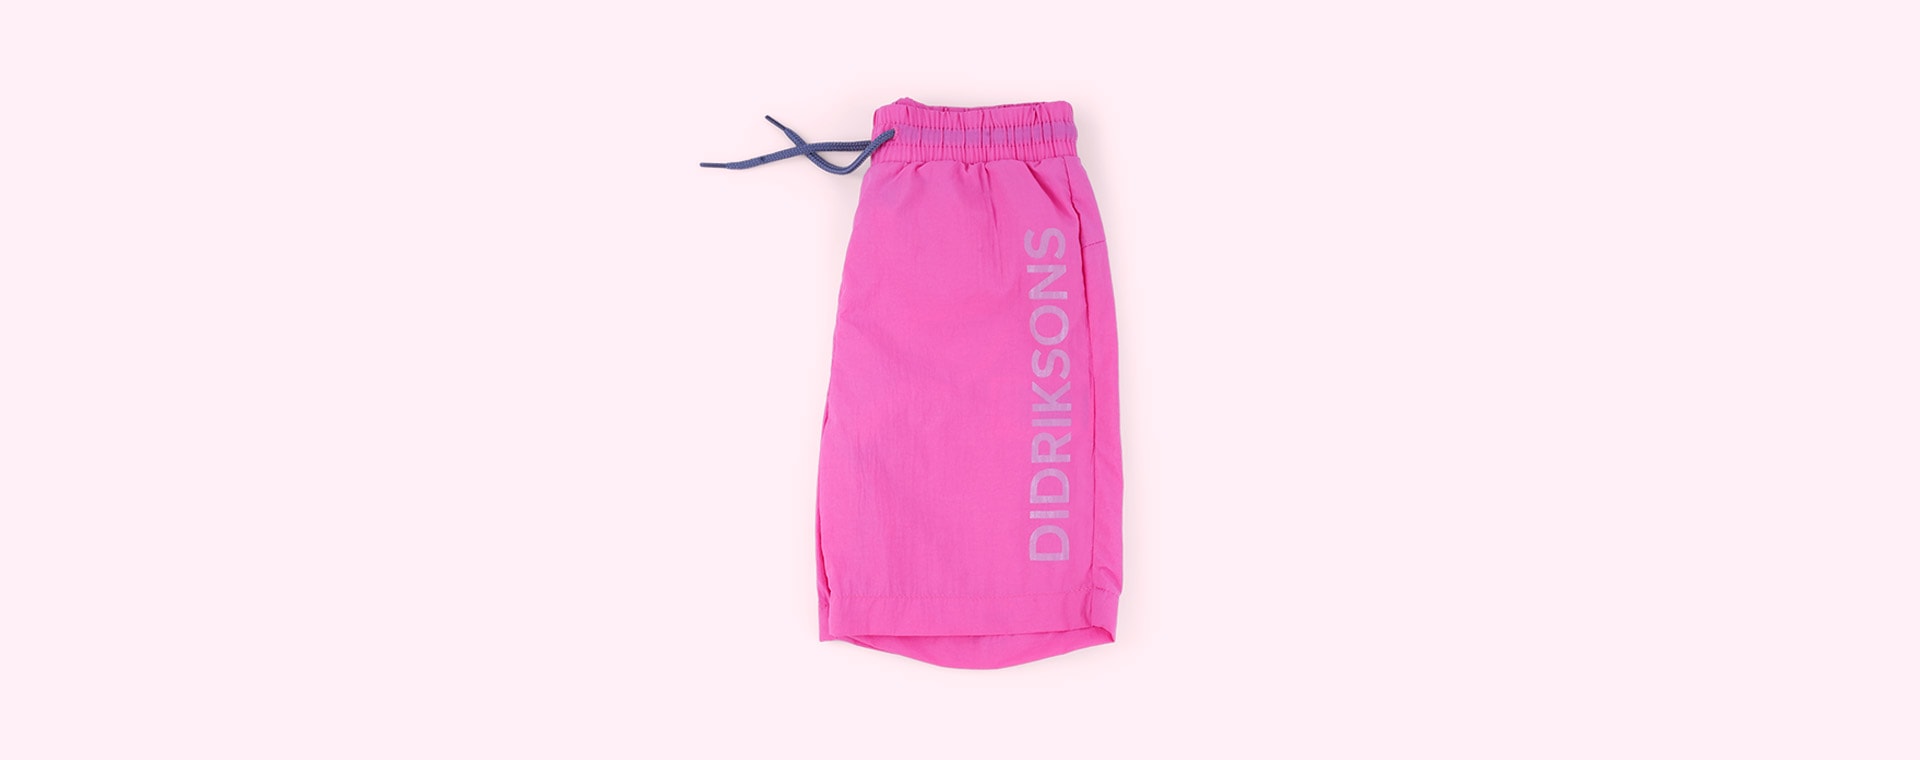 Sweet Pink Didriksons Castor Shorts